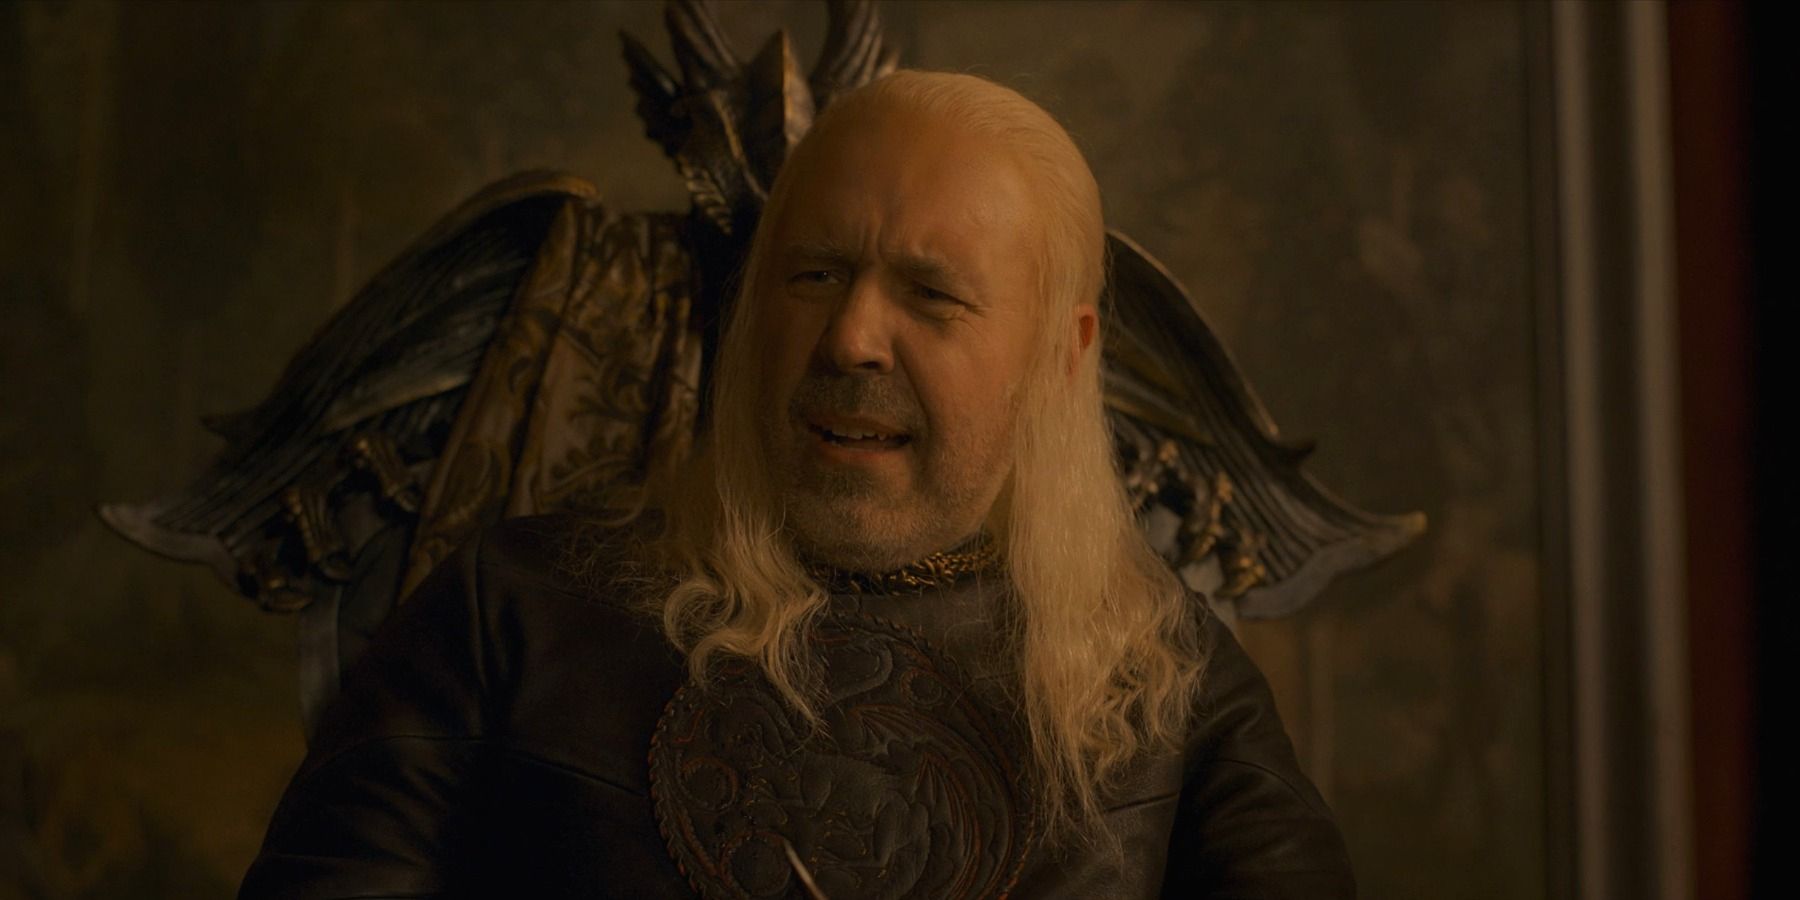 Paddy Considine as King Viserys I Targaryen in House of the Dragon.